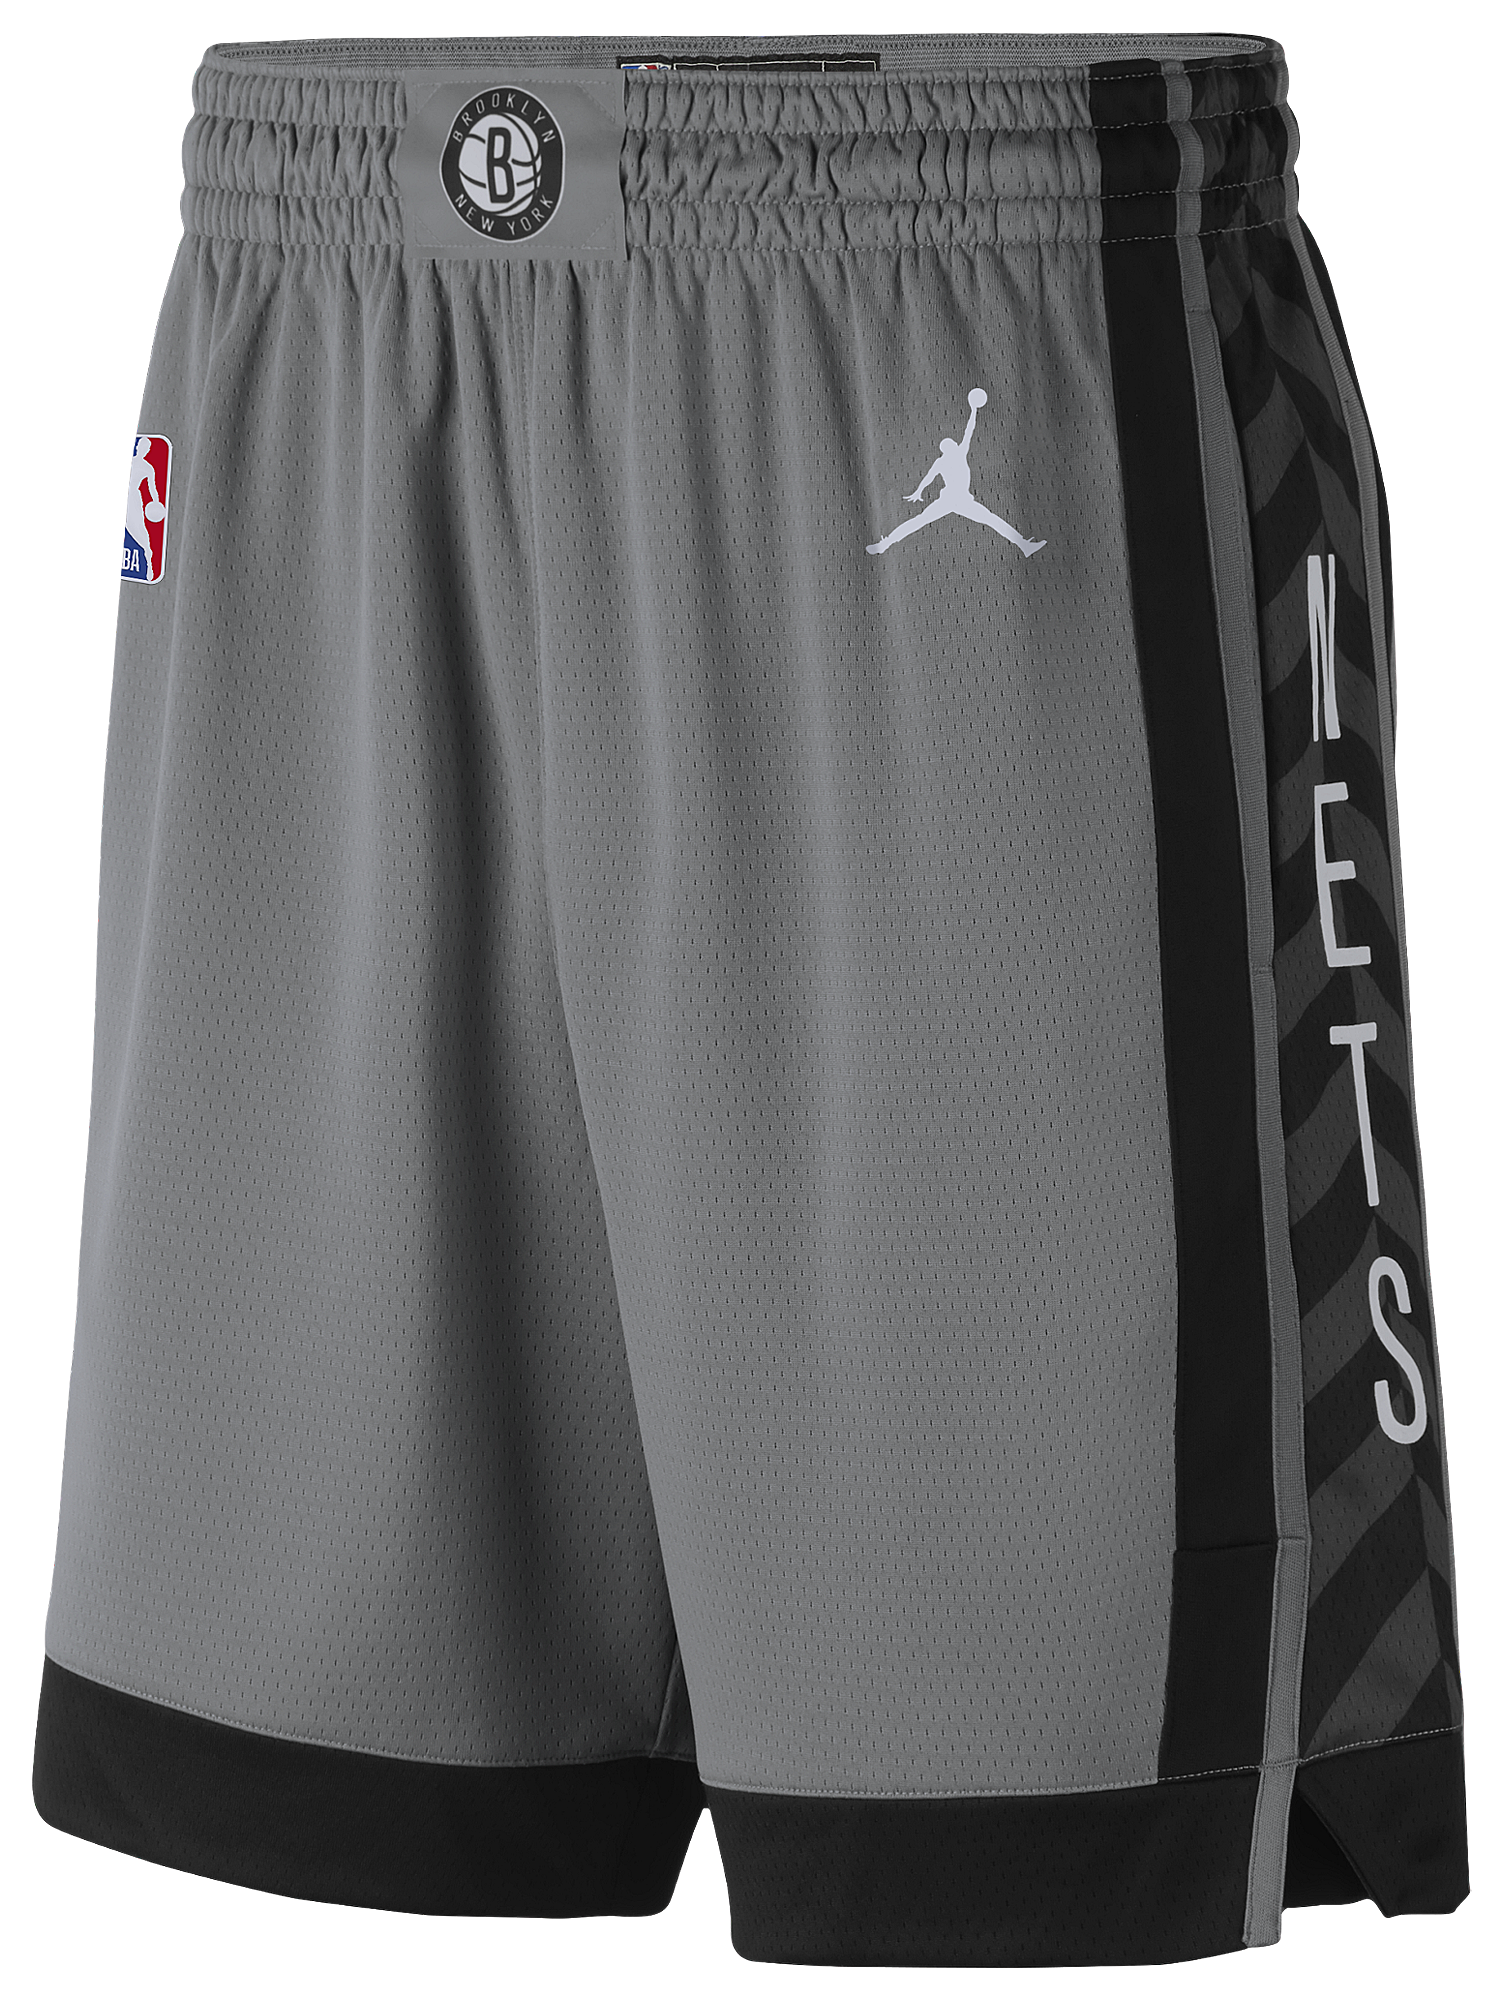 Jordan Basketball Shorts | Foot Locker